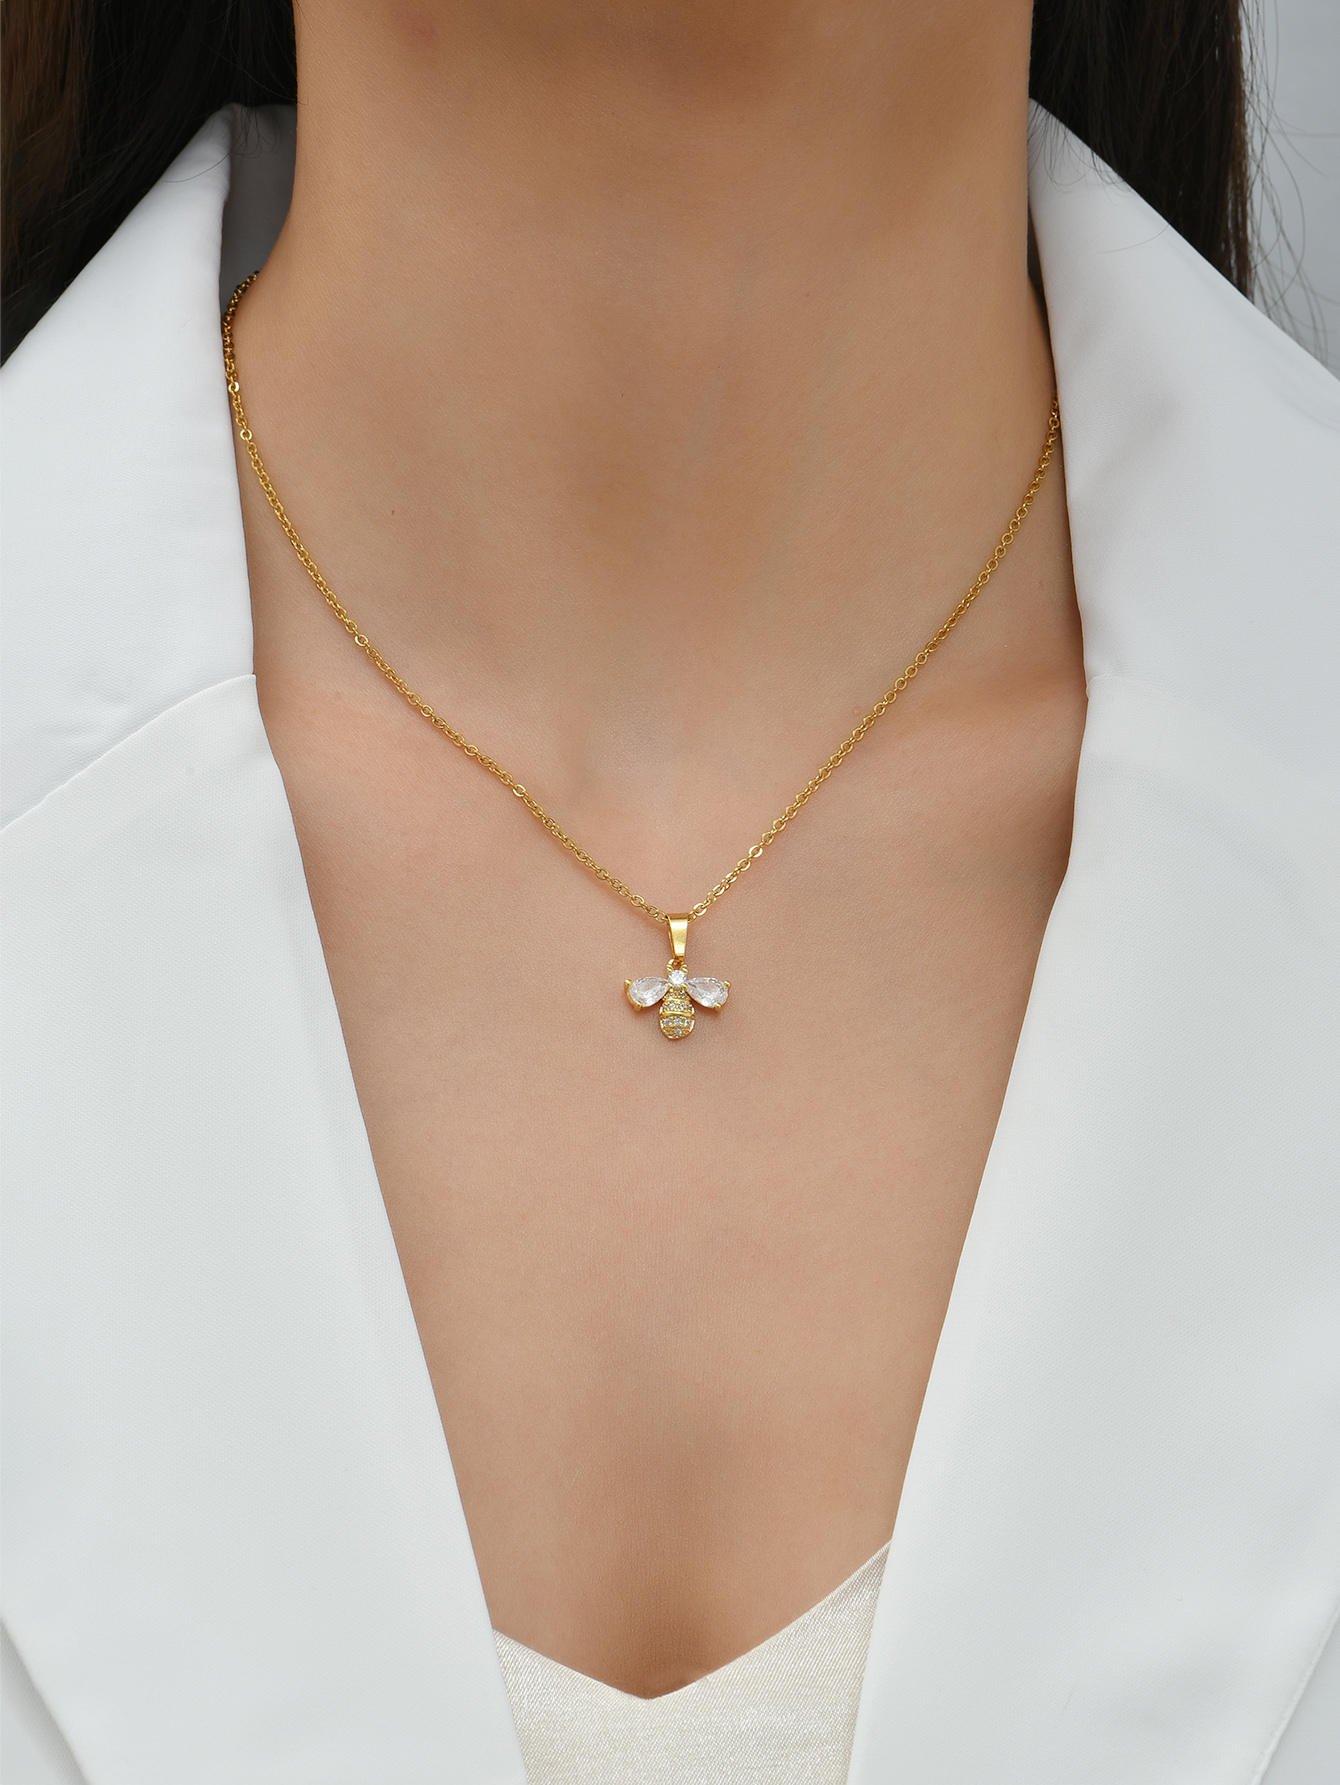 10 pcs - Bee Design Zircon Crystal Gold Plated Pendant Necklace|GCJ392|UK SELLER